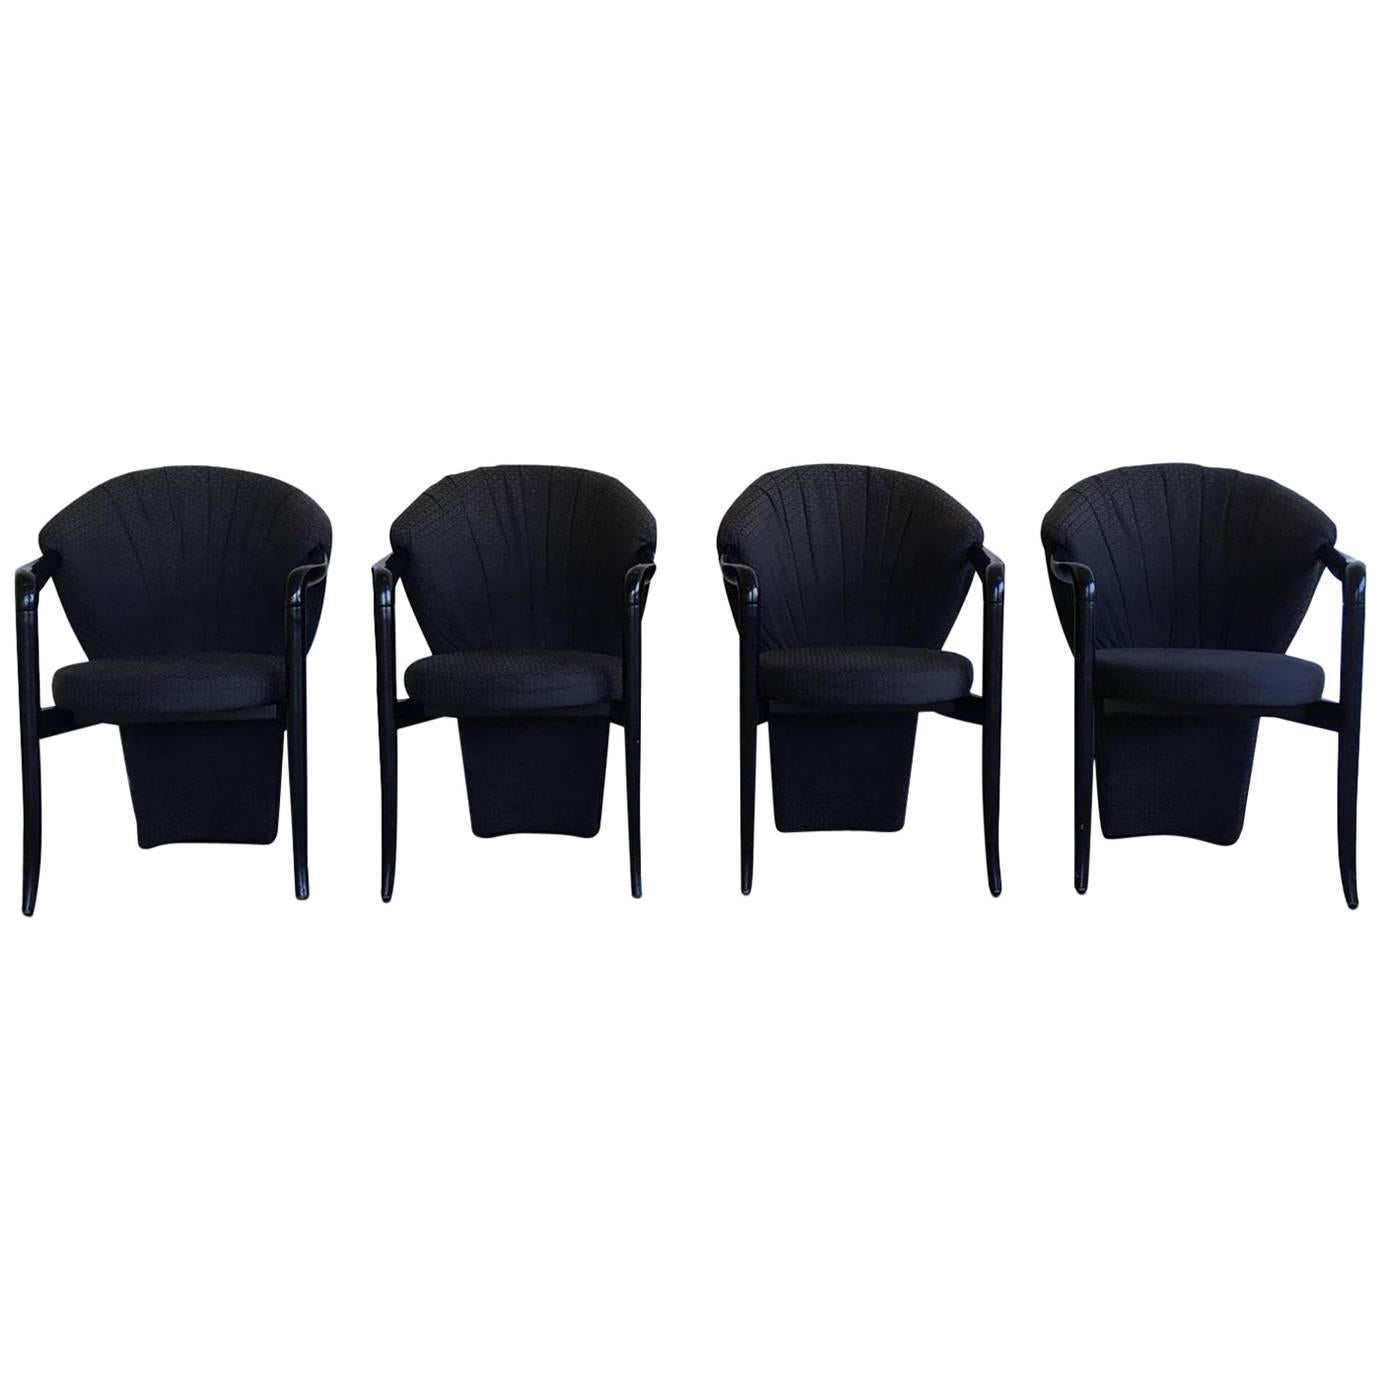 Pietro Constantini, Set of Four Black Elegant Dining Room Chairs, 1980s For Sale